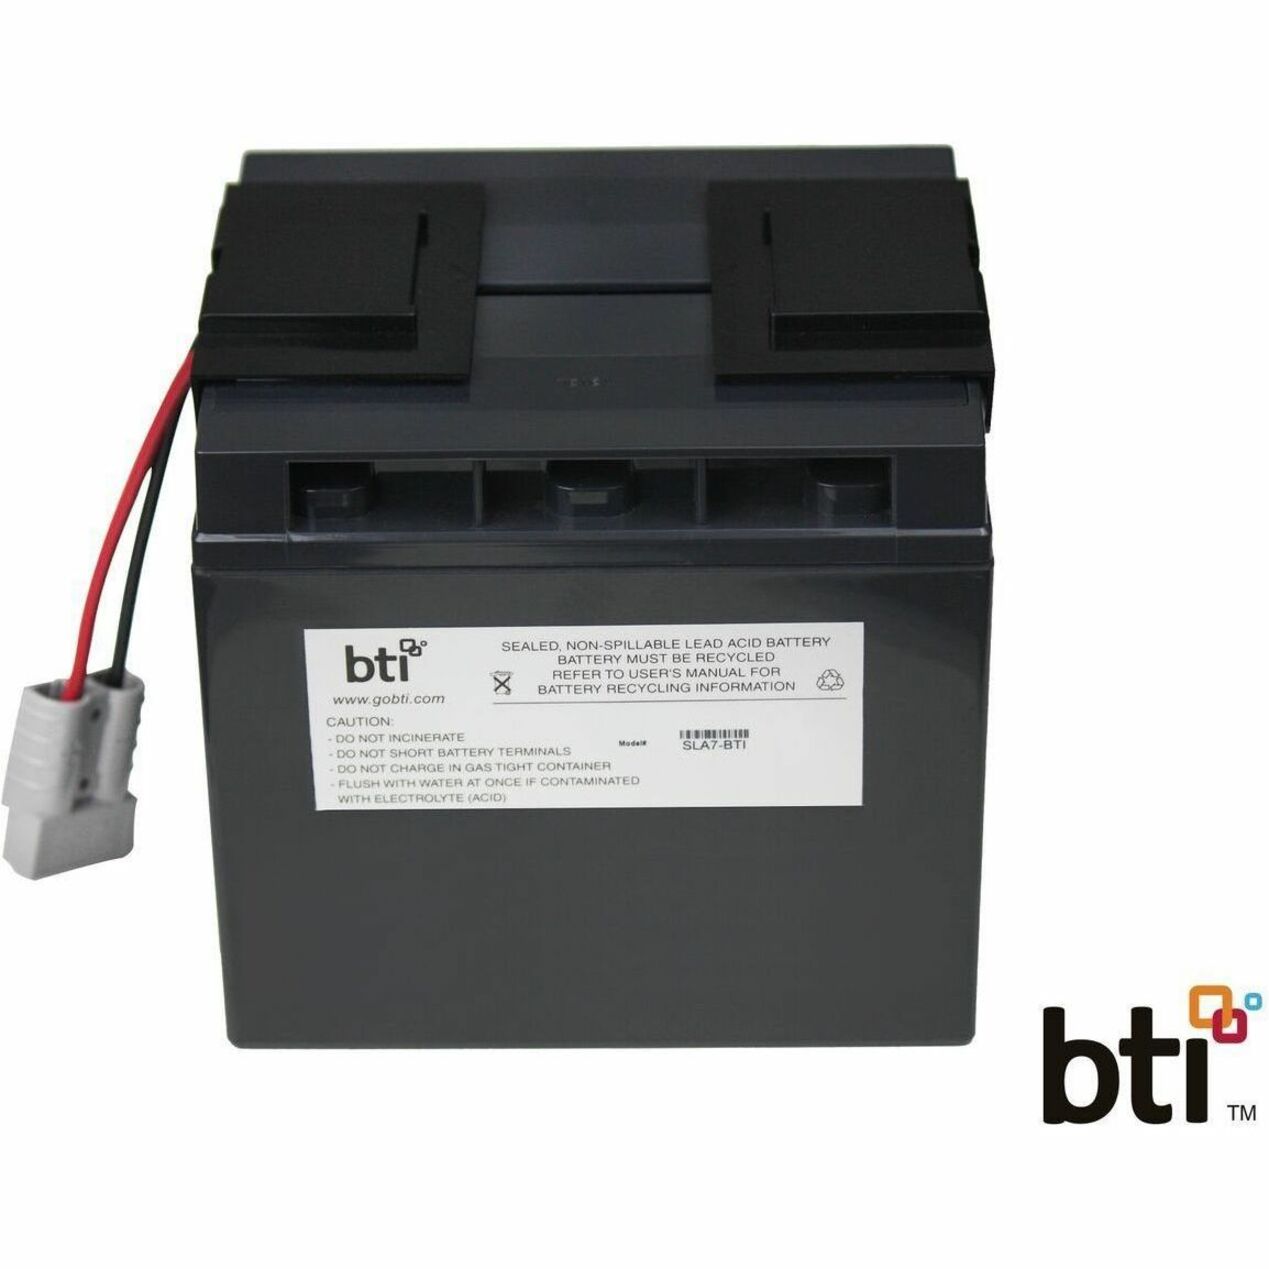 BTI RBC7-SLA7-BTI UPS Replacement Battery Cartridge, 18 Month Limited Warranty